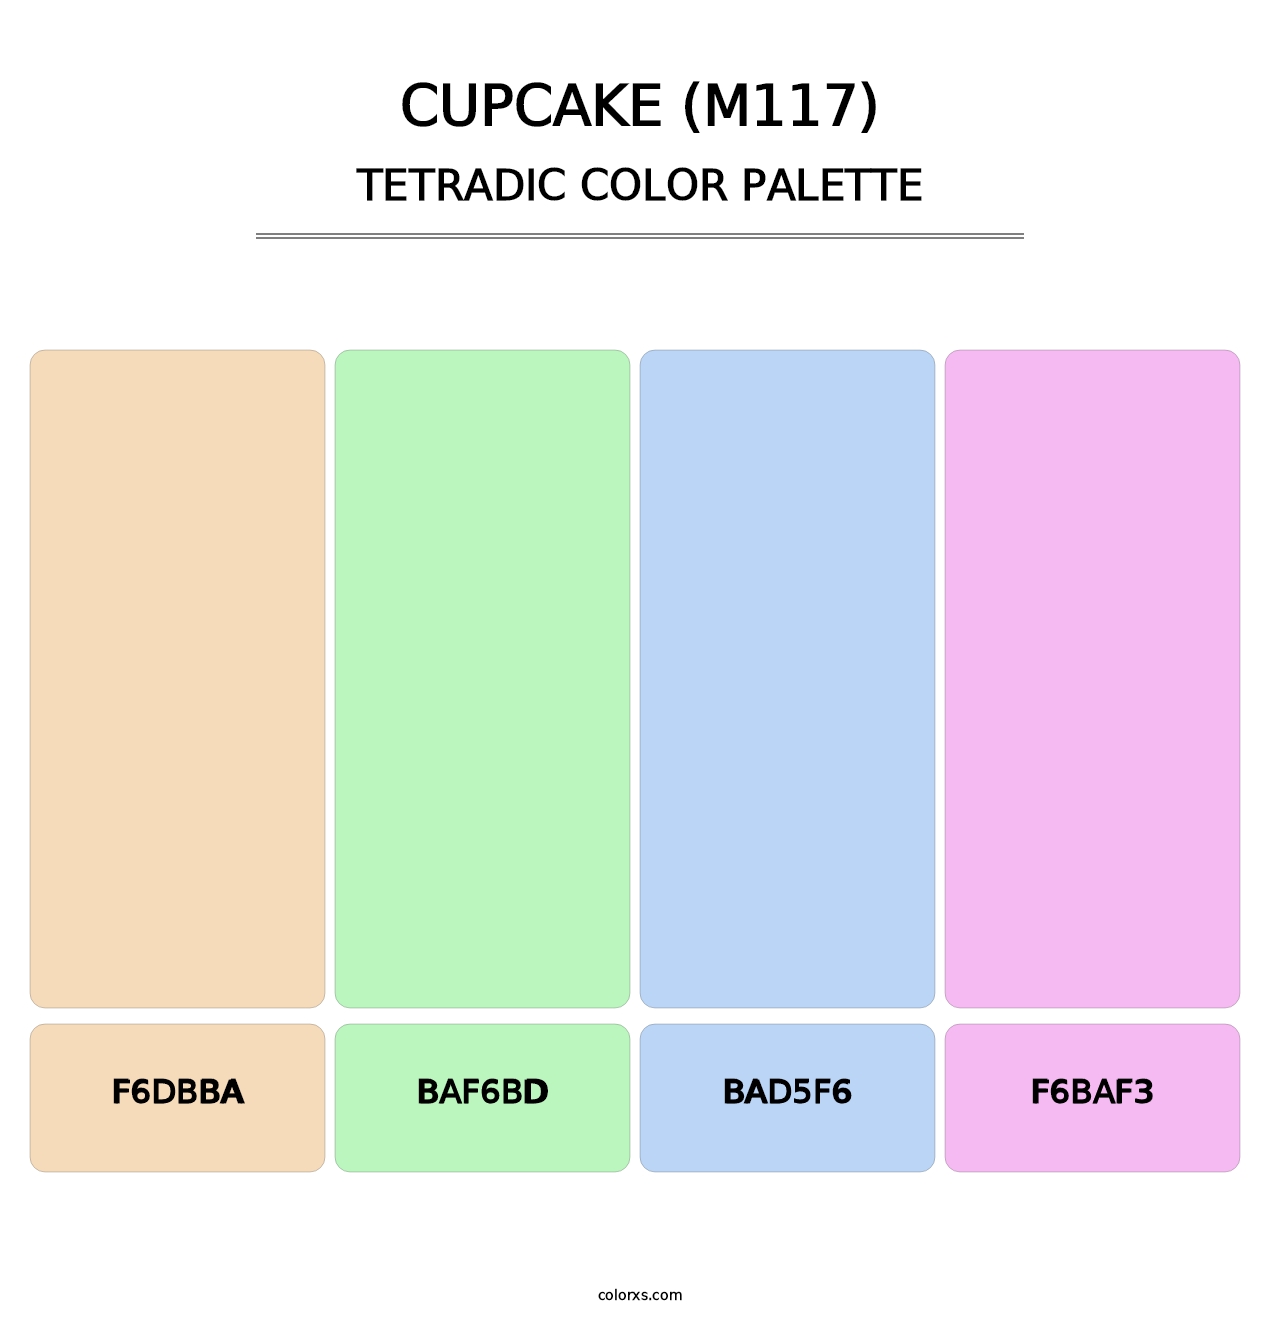 Cupcake (M117) - Tetradic Color Palette